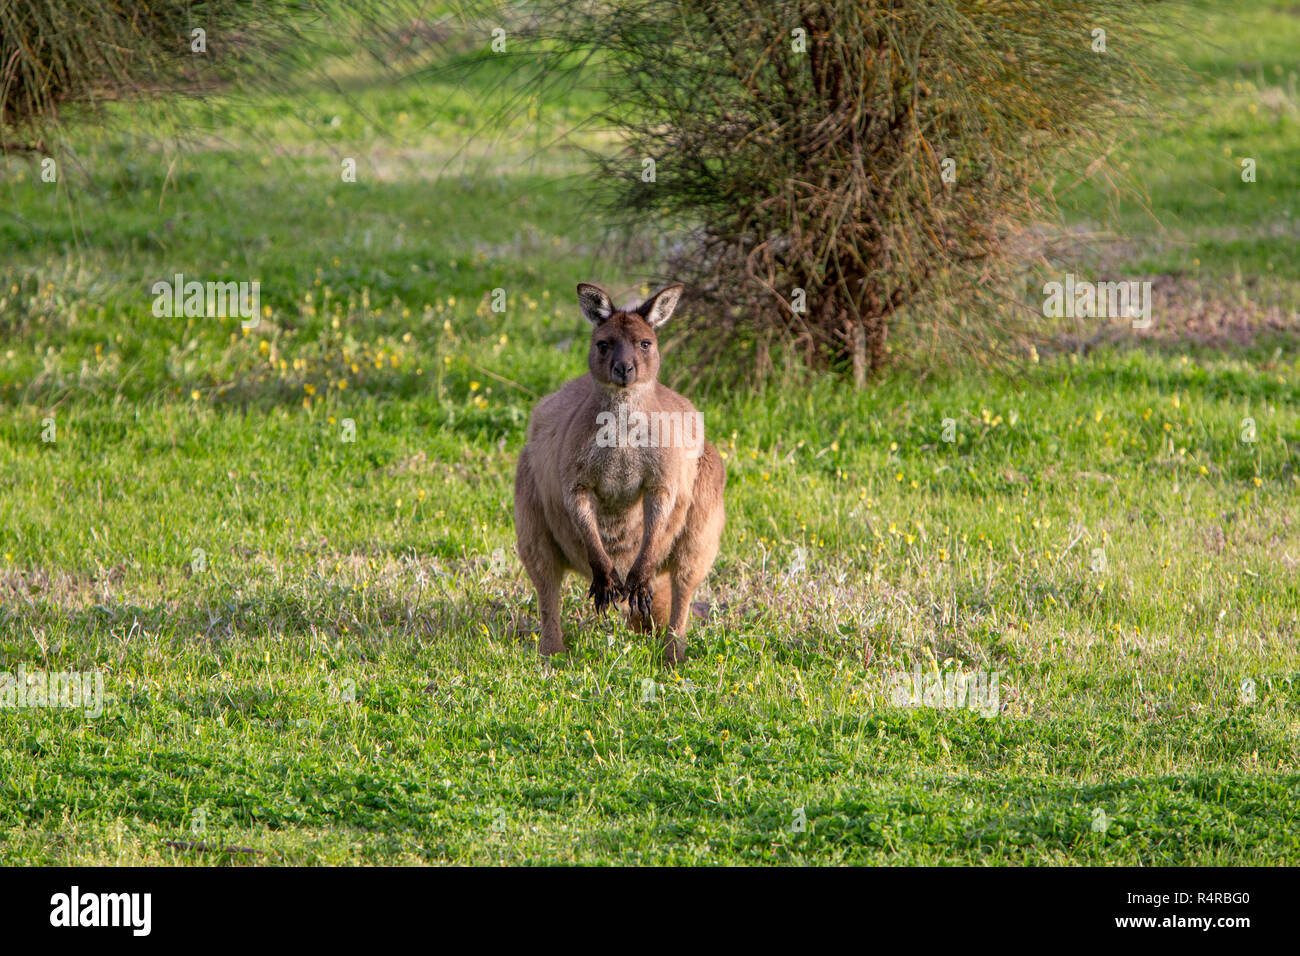 Adult Kangaroo High Stock Photography and Images - Alamy